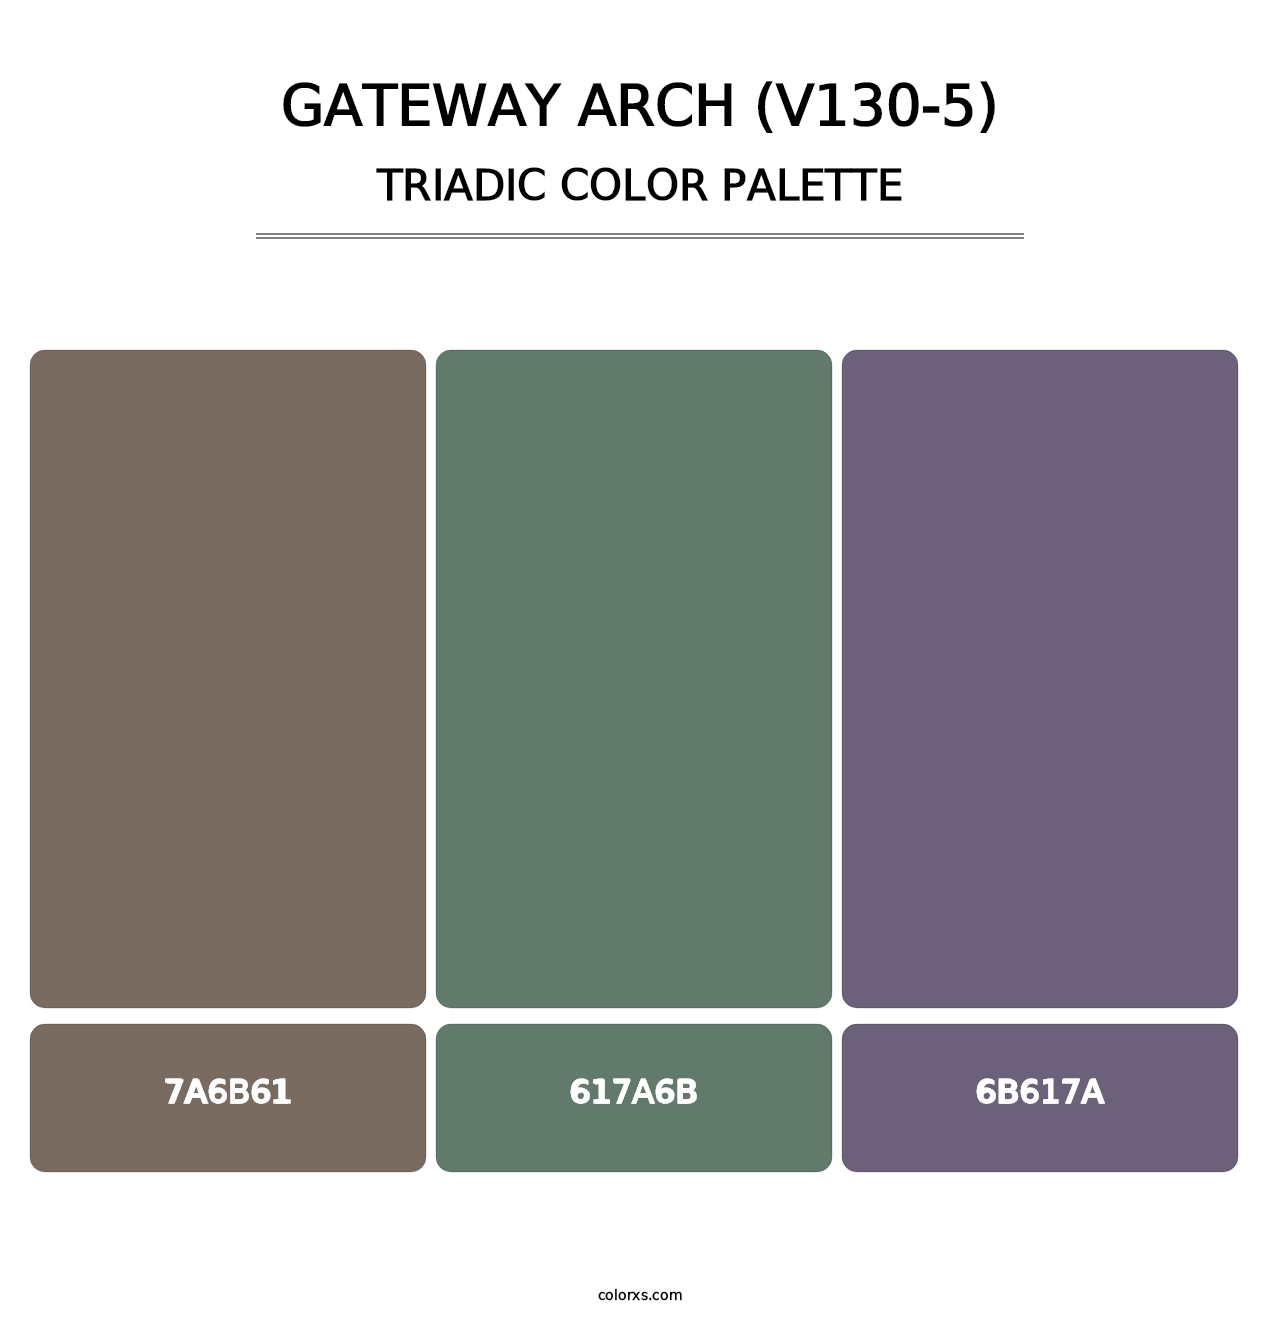 Gateway Arch (V130-5) - Triadic Color Palette